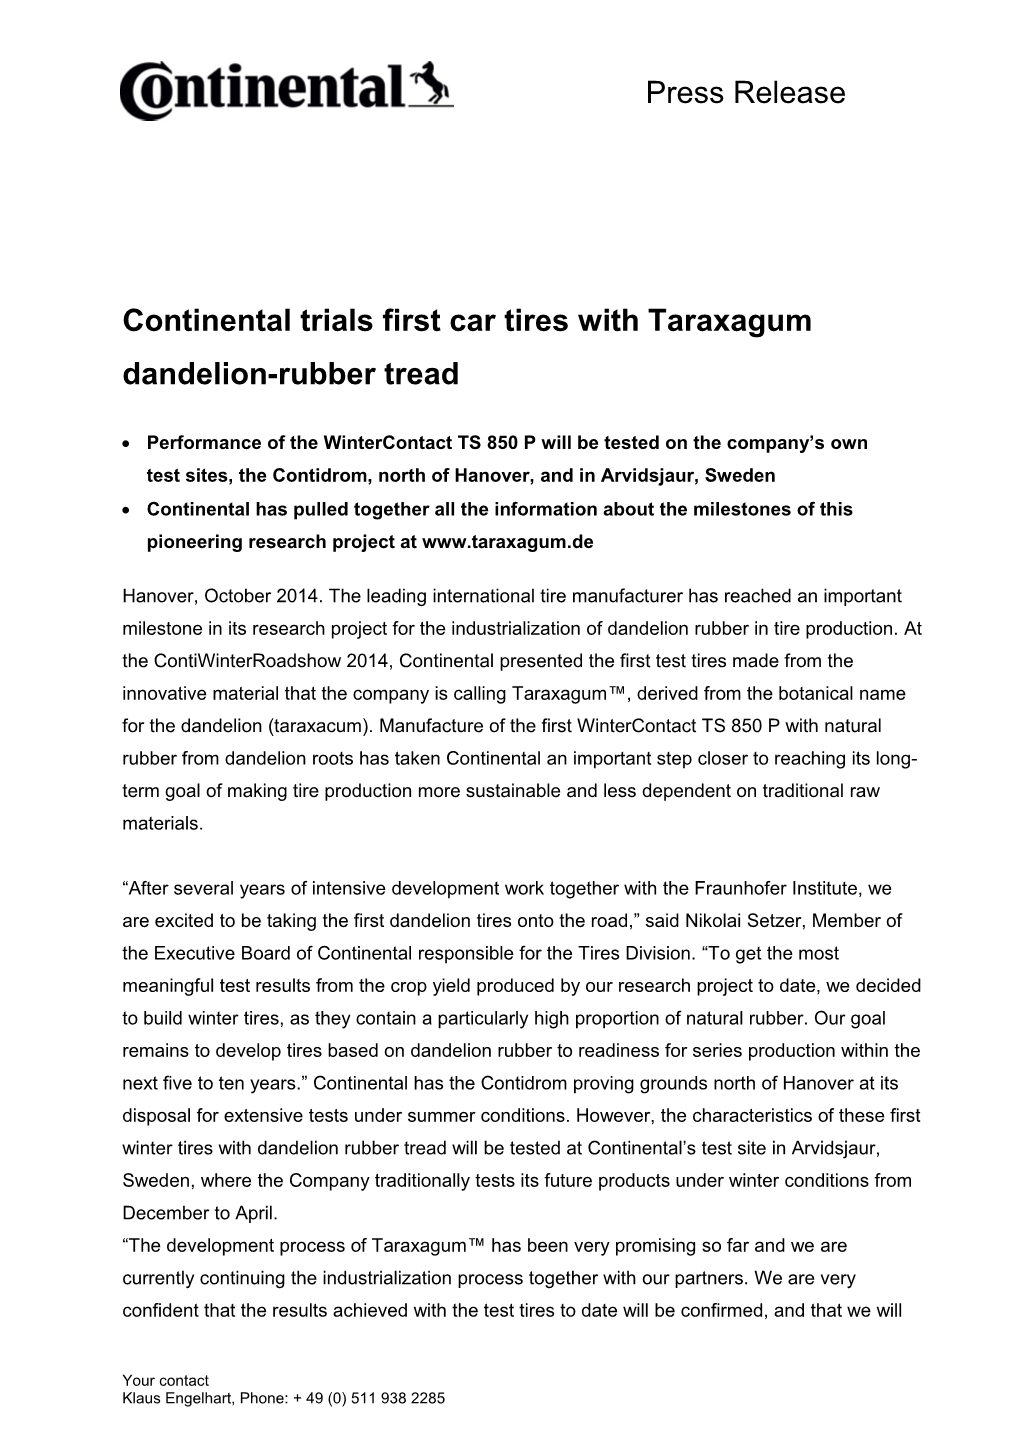 Continental Trials First Car Tires with Taraxagum Dandelion-Rubber Tread